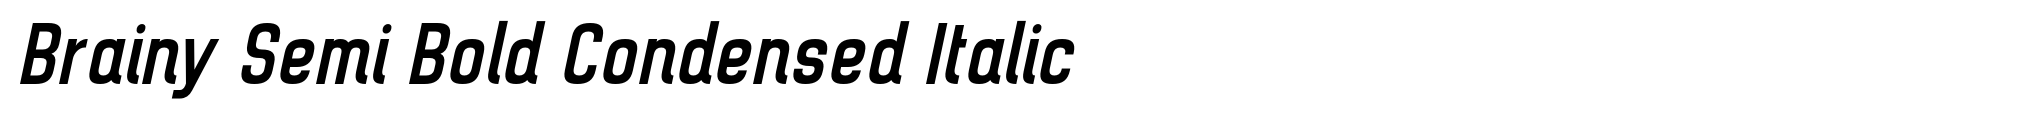 Brainy Semi Bold Condensed Italic image